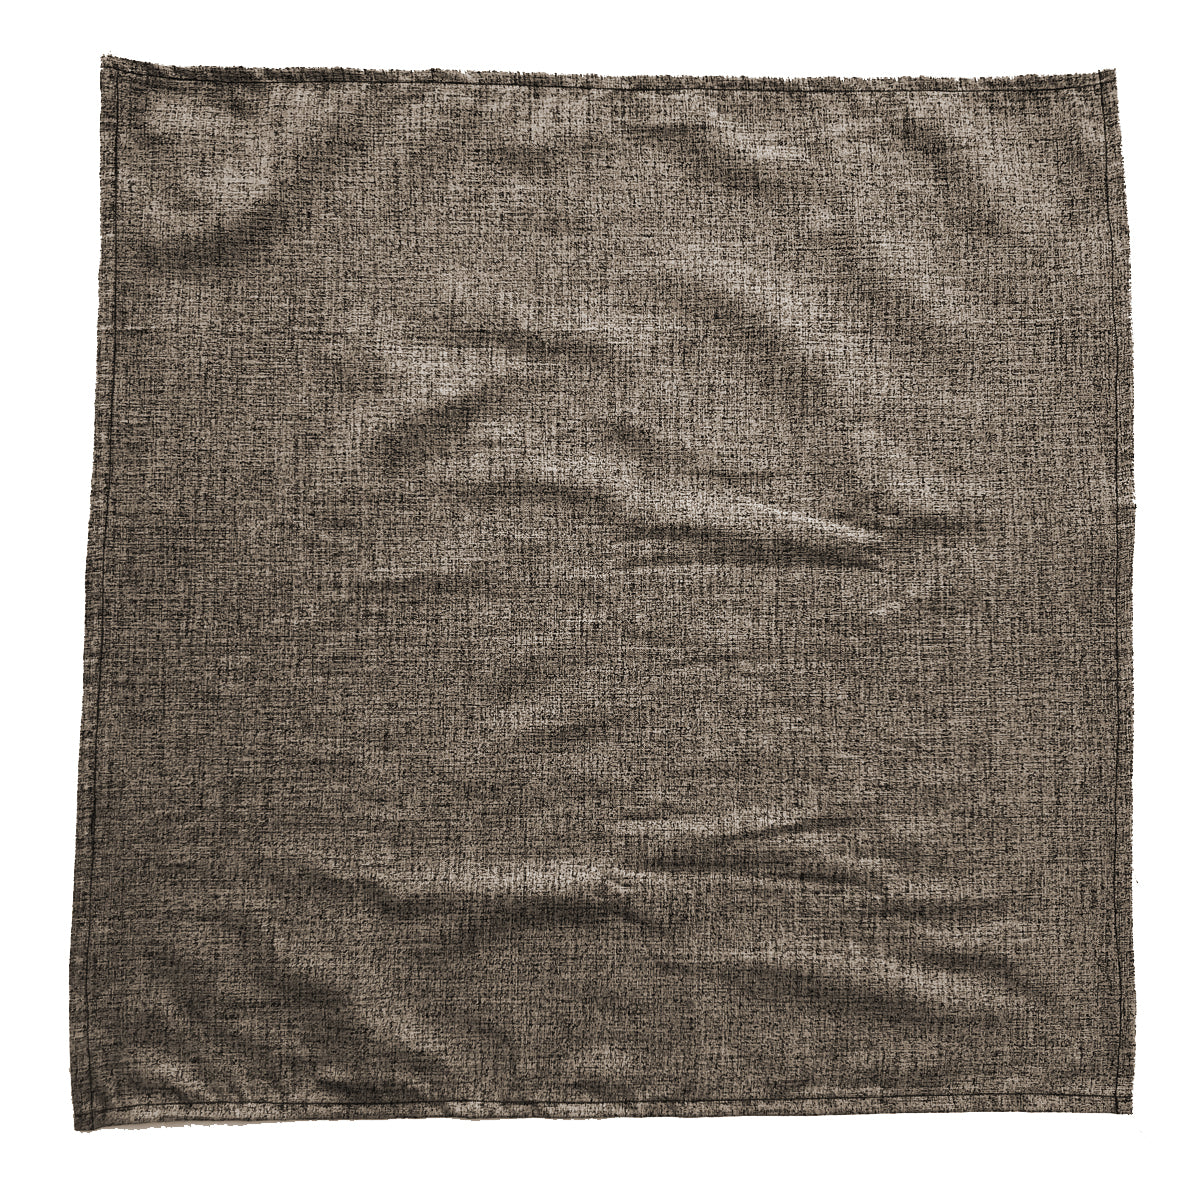 Japanese Nara Cotton Canvas Indigo Handkerchief 27.5 x 27.5 "TEX2"